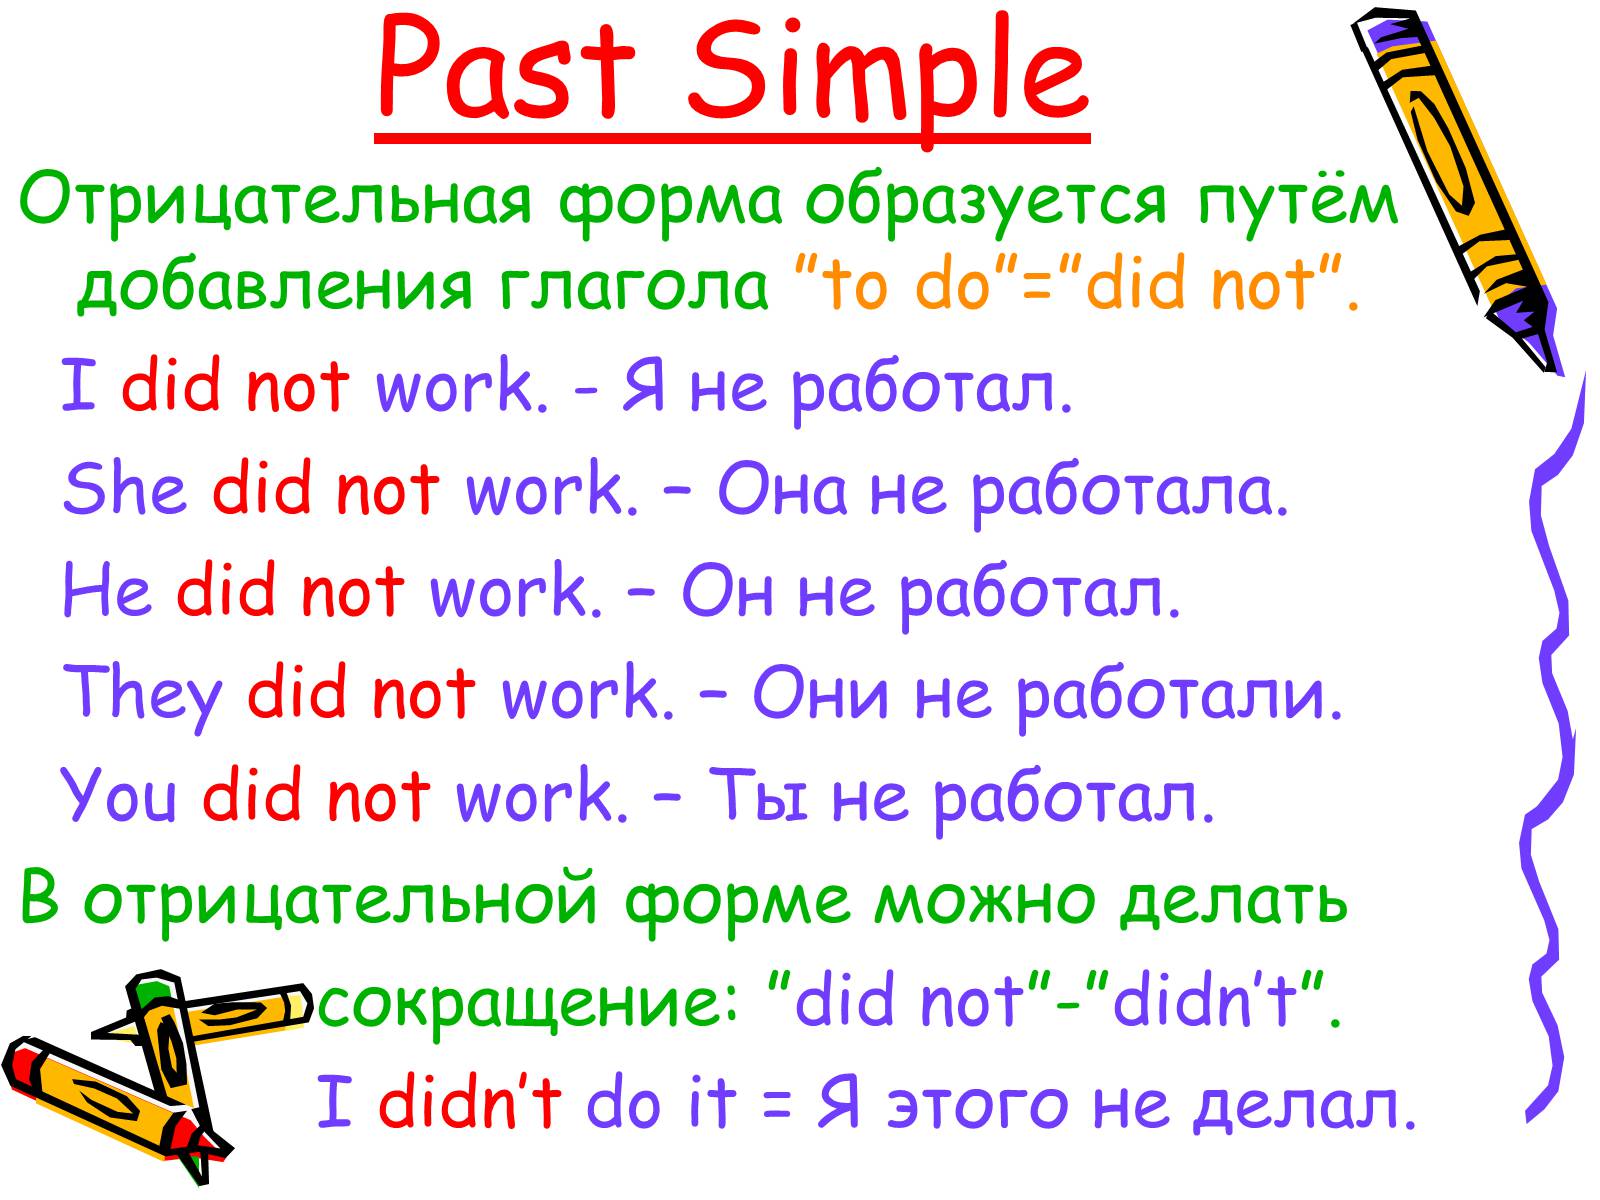 Pat simple. Как составлять предложения в past simple. 3 Легких предложения past simple. Past simple примеры предложений с переводом. 3 Предложения в past simple.